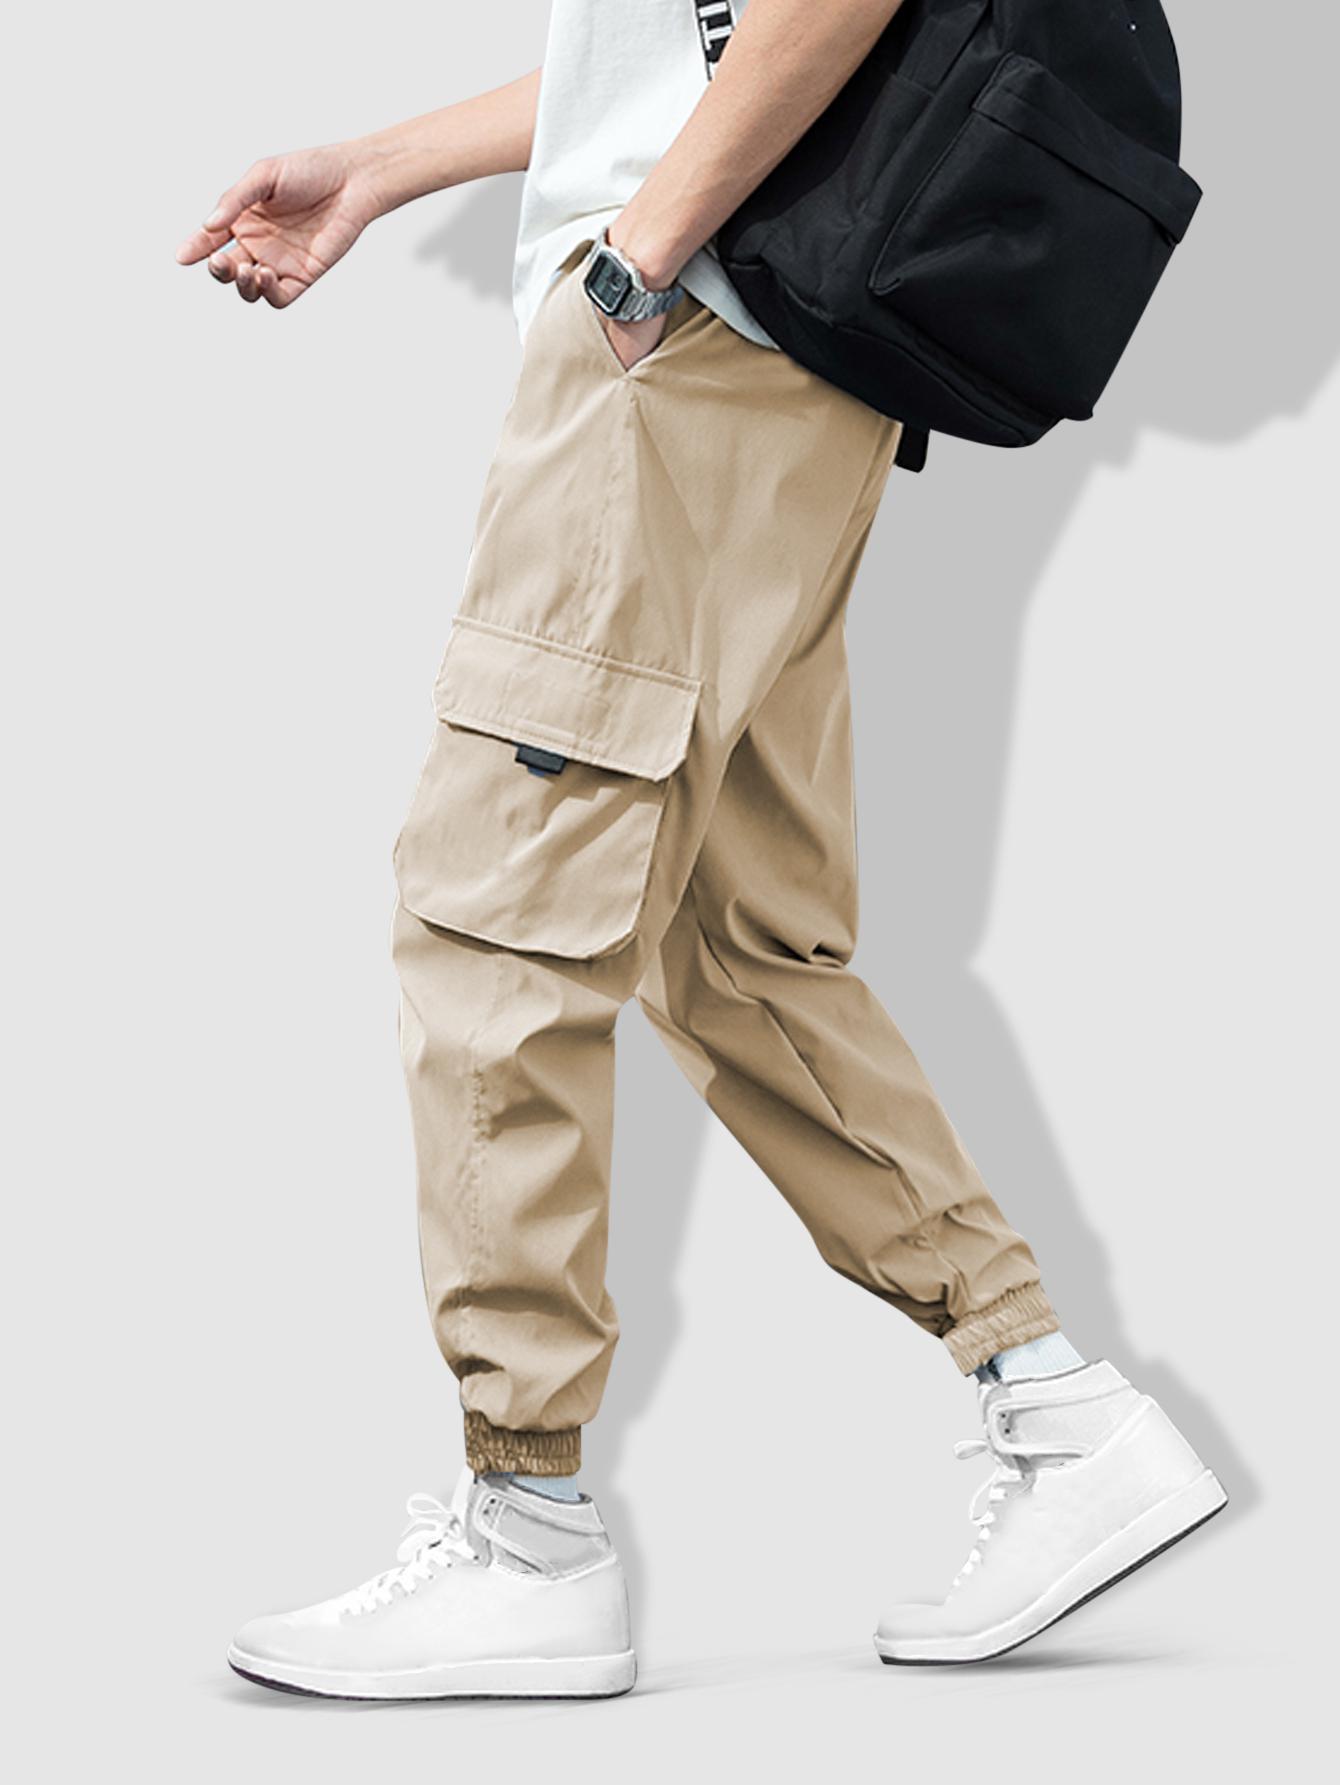 ZAFUL Men's Multi Pockets Solid Color Drawstring Jogger Cargo Pants L Light coffee